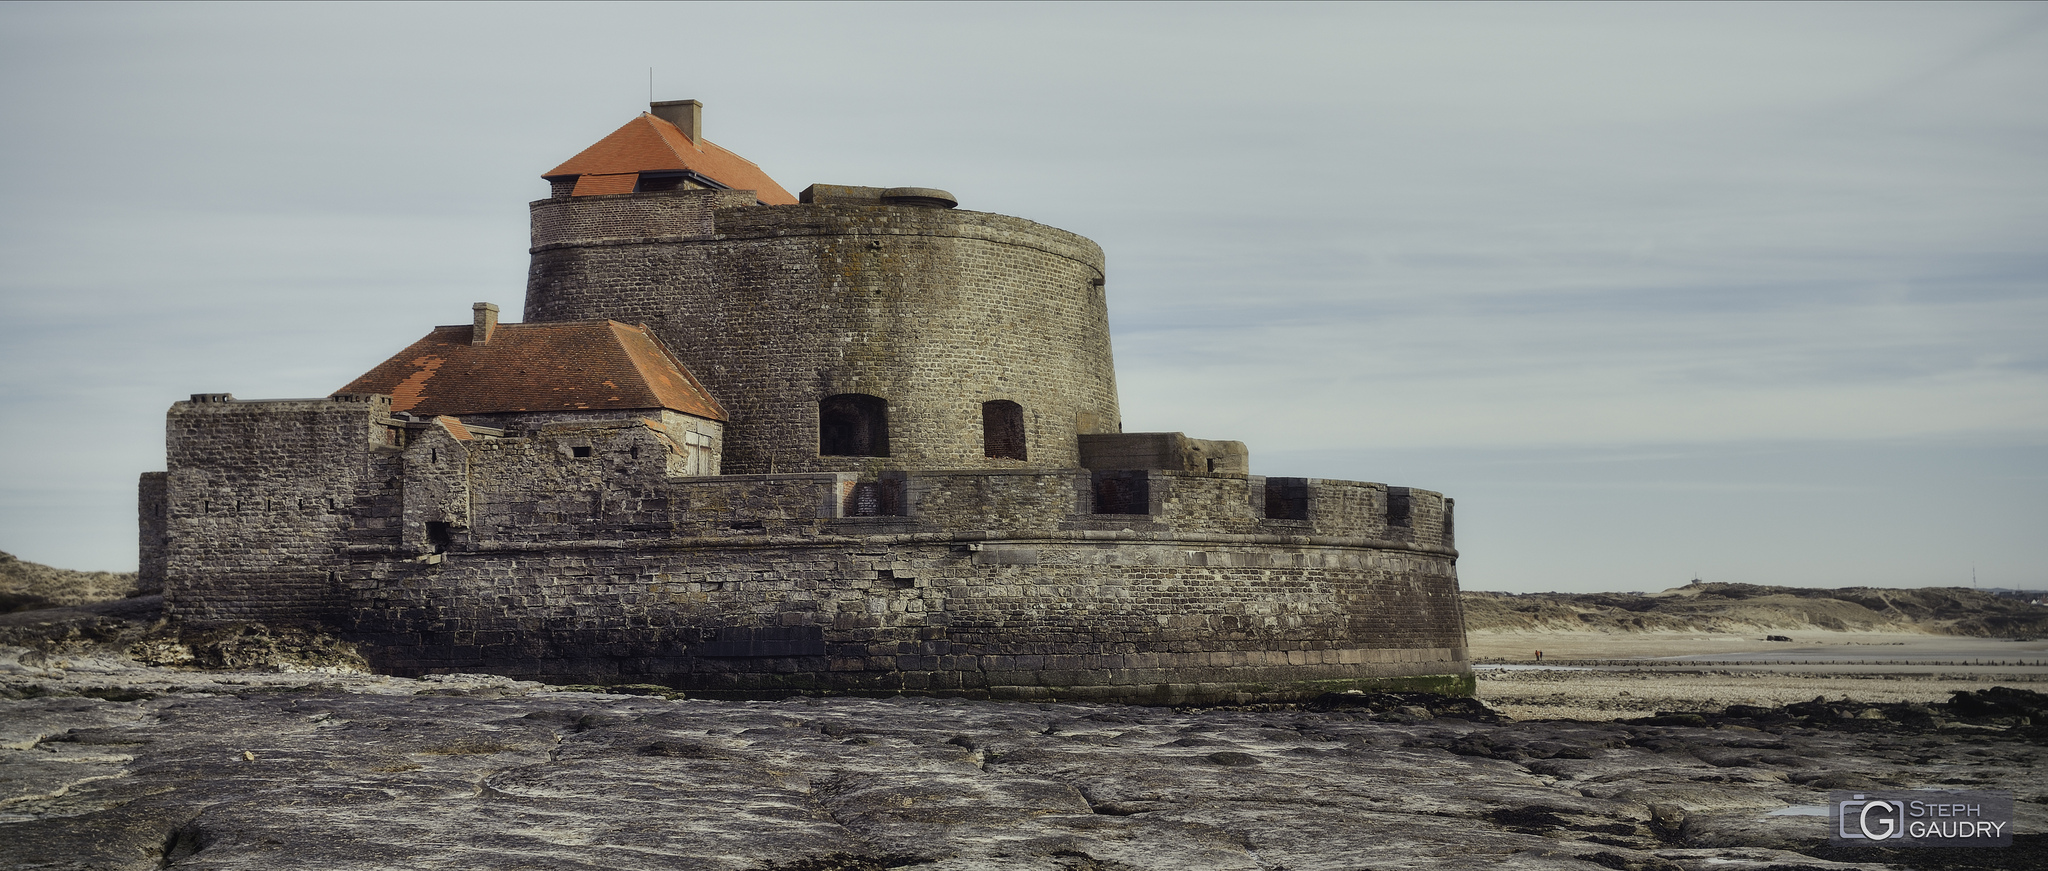 Fort d'Ambleteuse [Click to start slideshow]